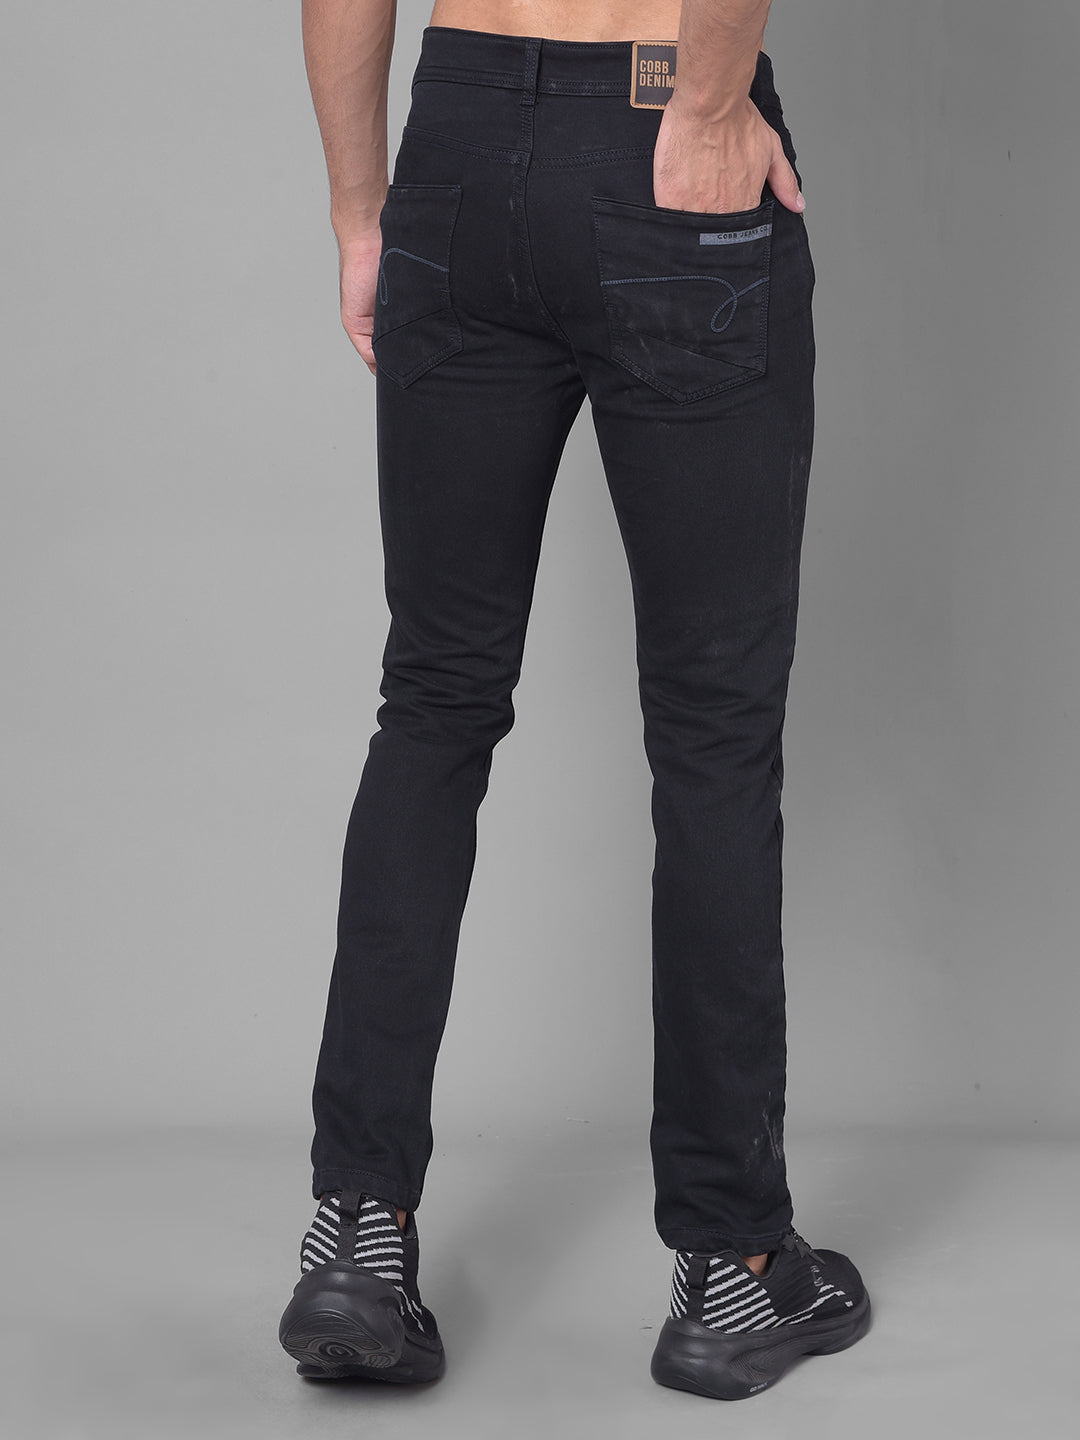 Cobb Black Narrow Fit Premium Jeans